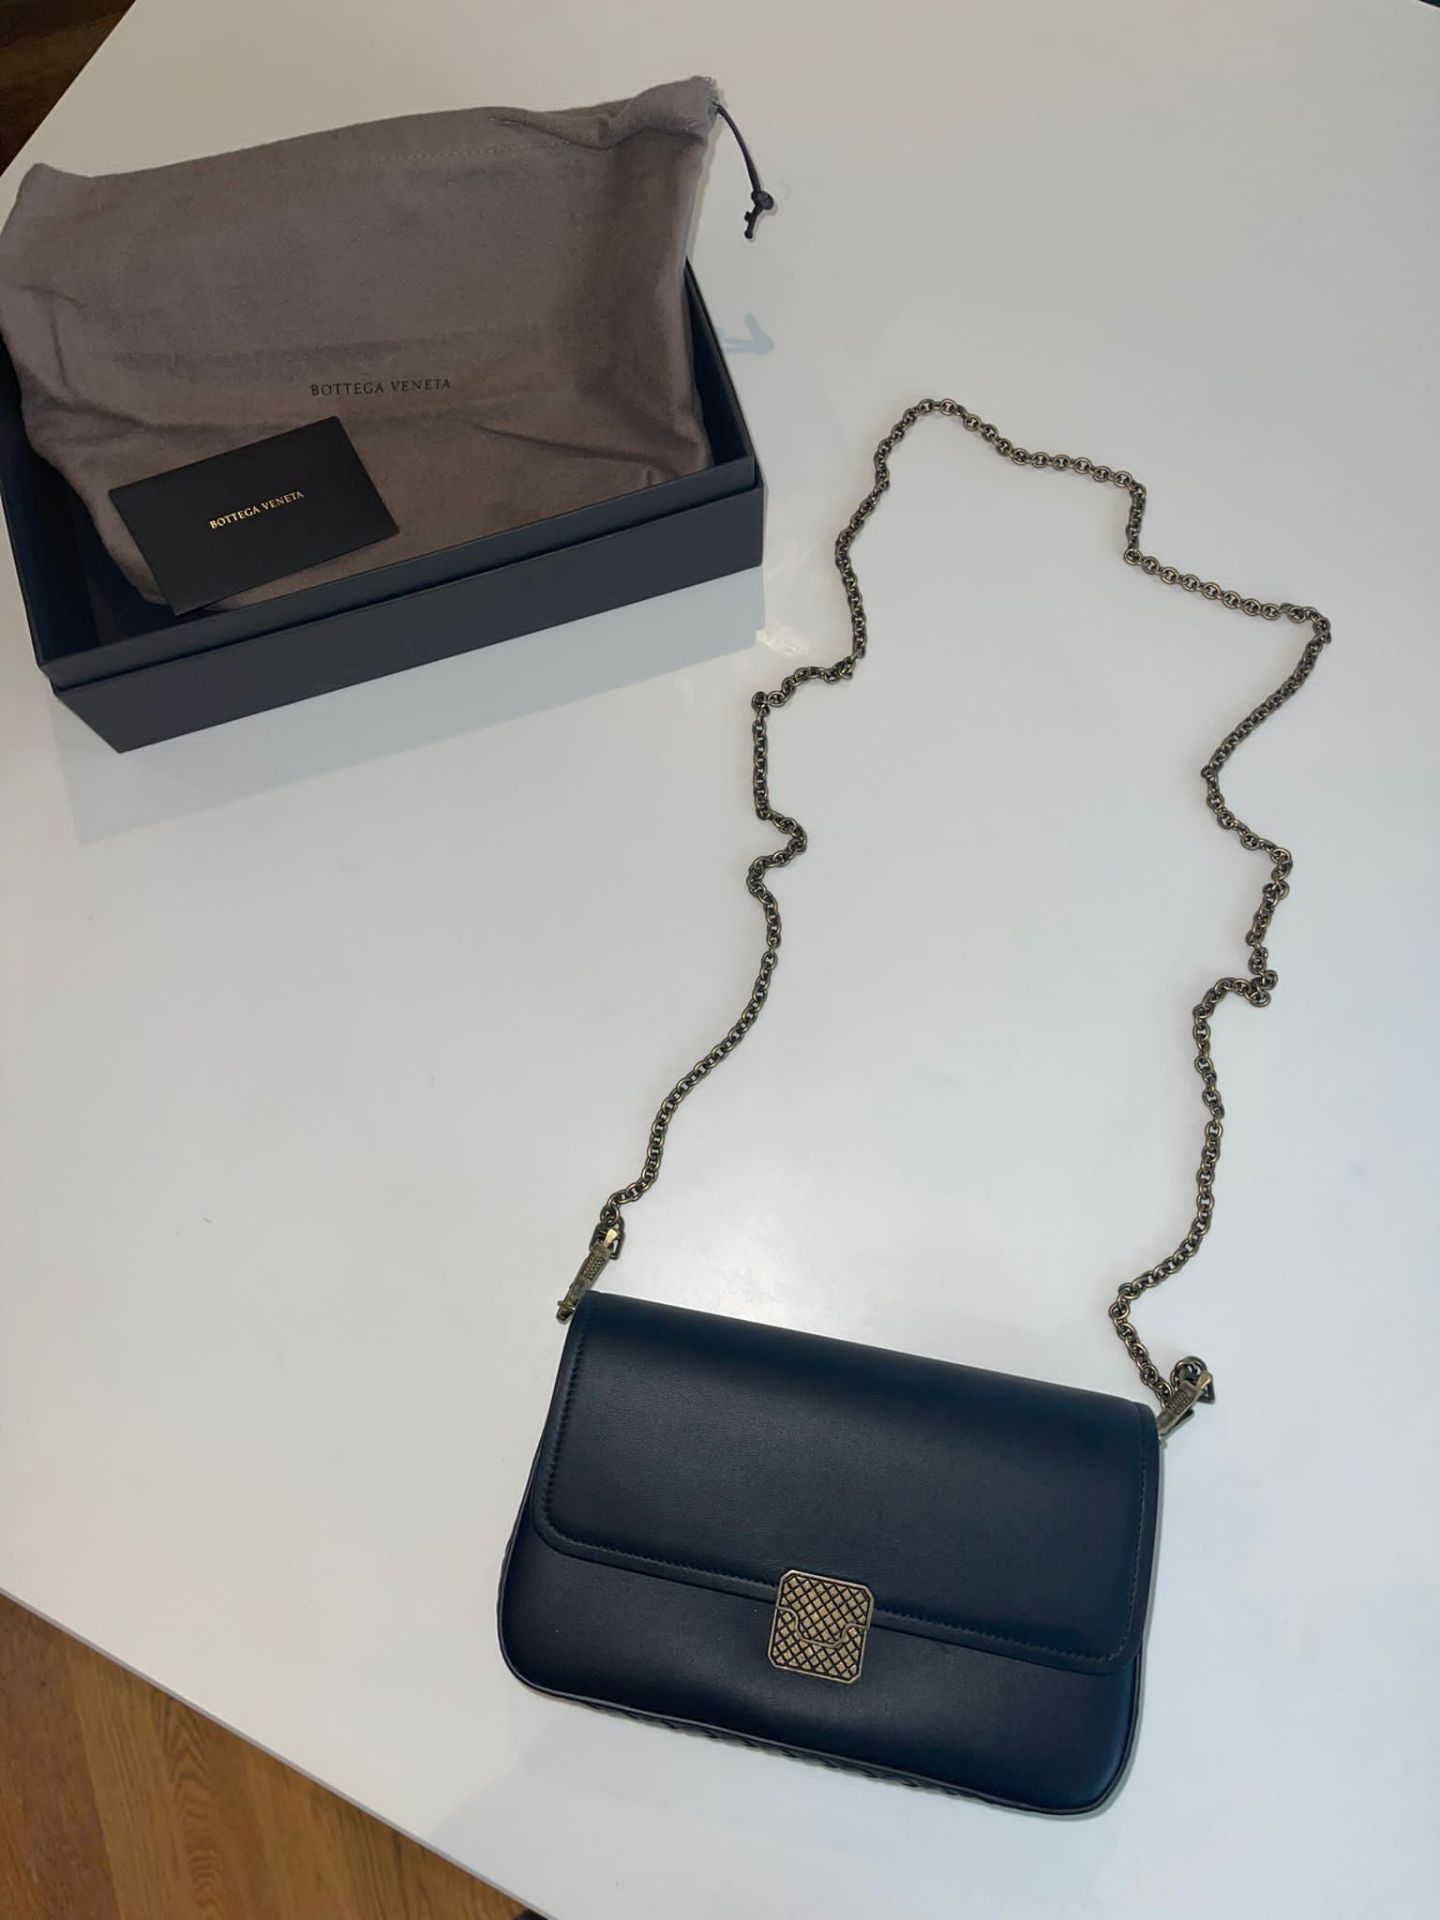 *NO VAT*  Bottega Veneta Crossbody Bag, Black. RRP £2100.00, Sheek and Stylish, this bag is a must